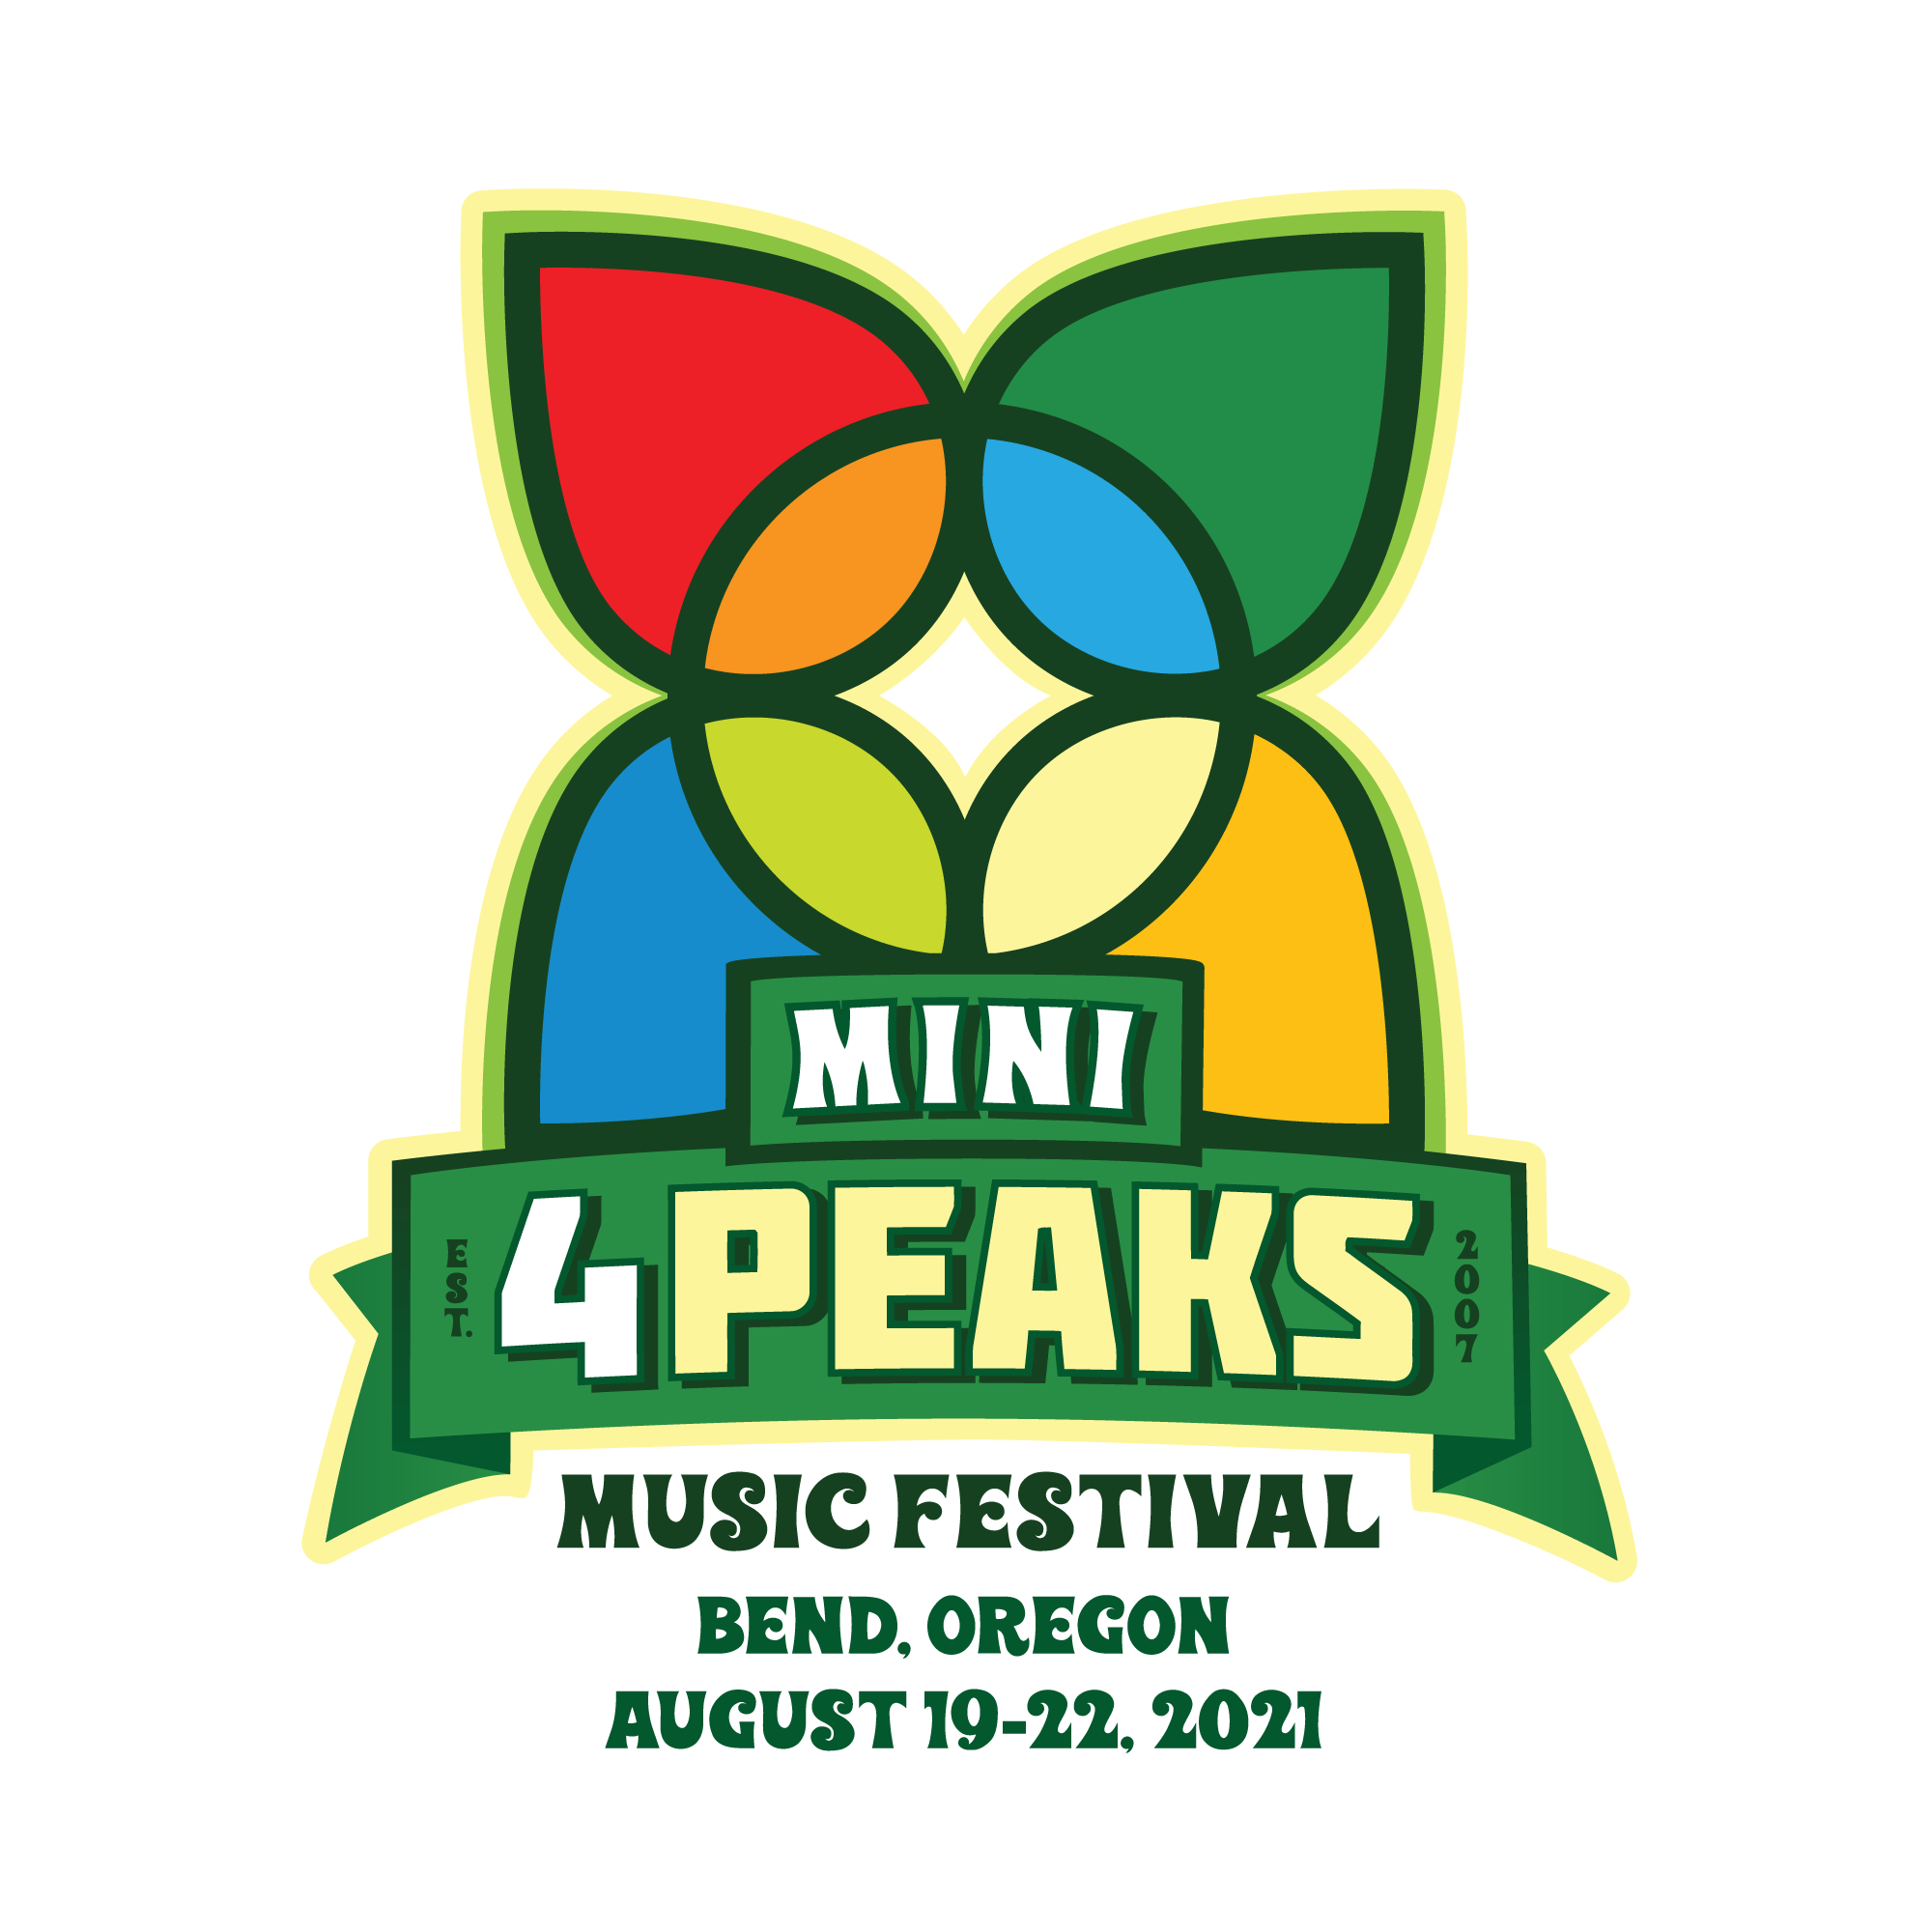 4peaks music festival